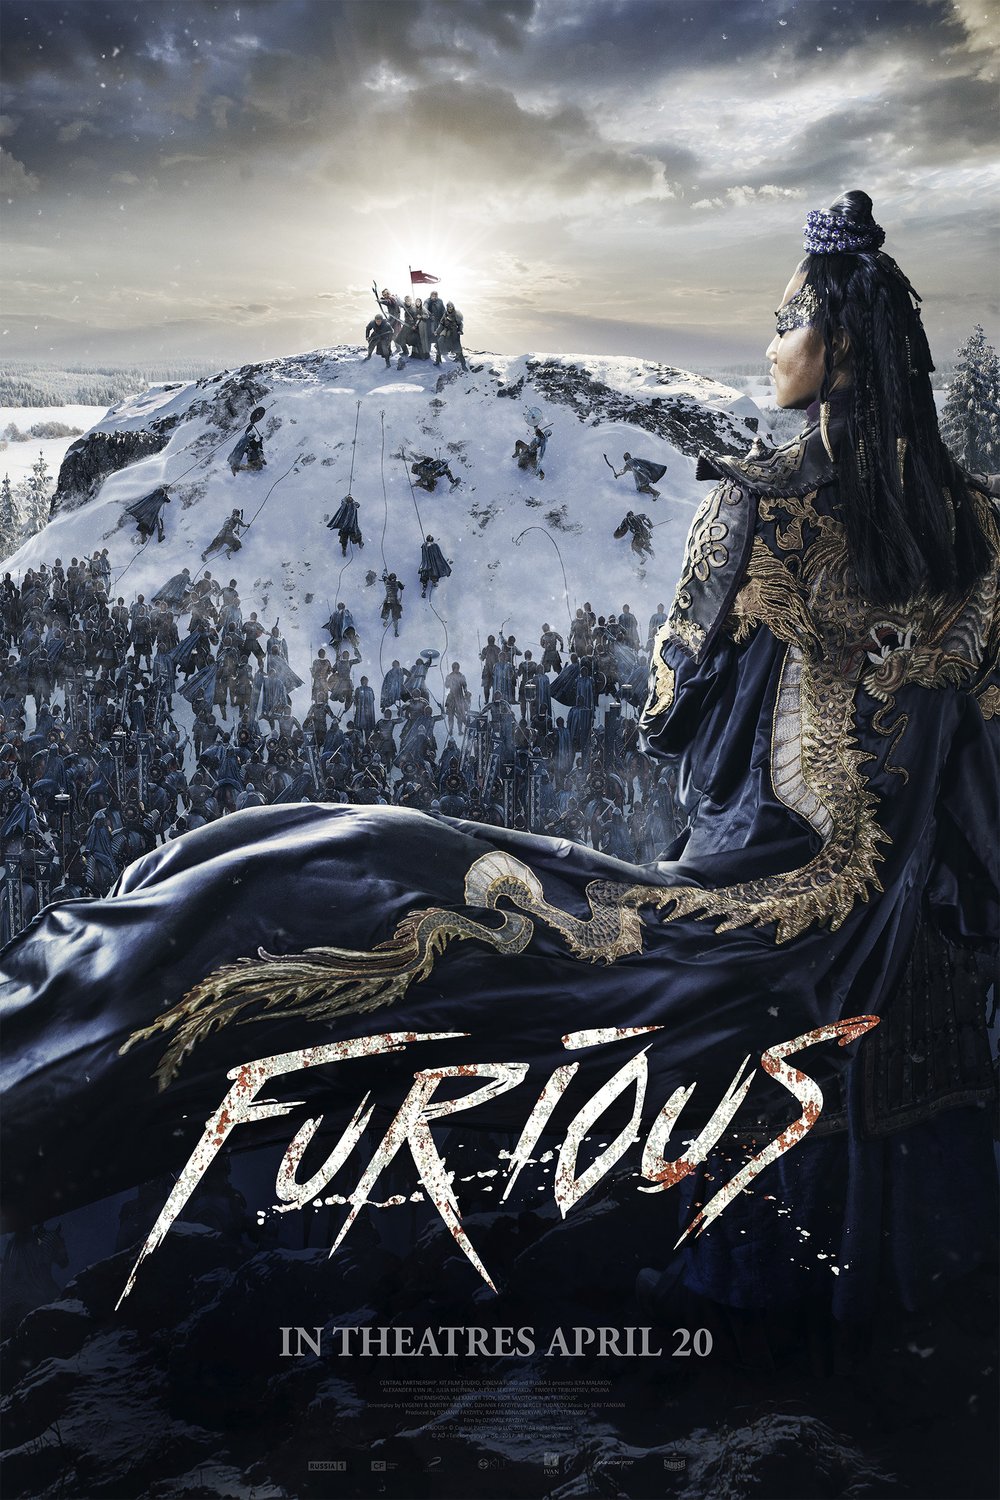 L'affiche du film Furious